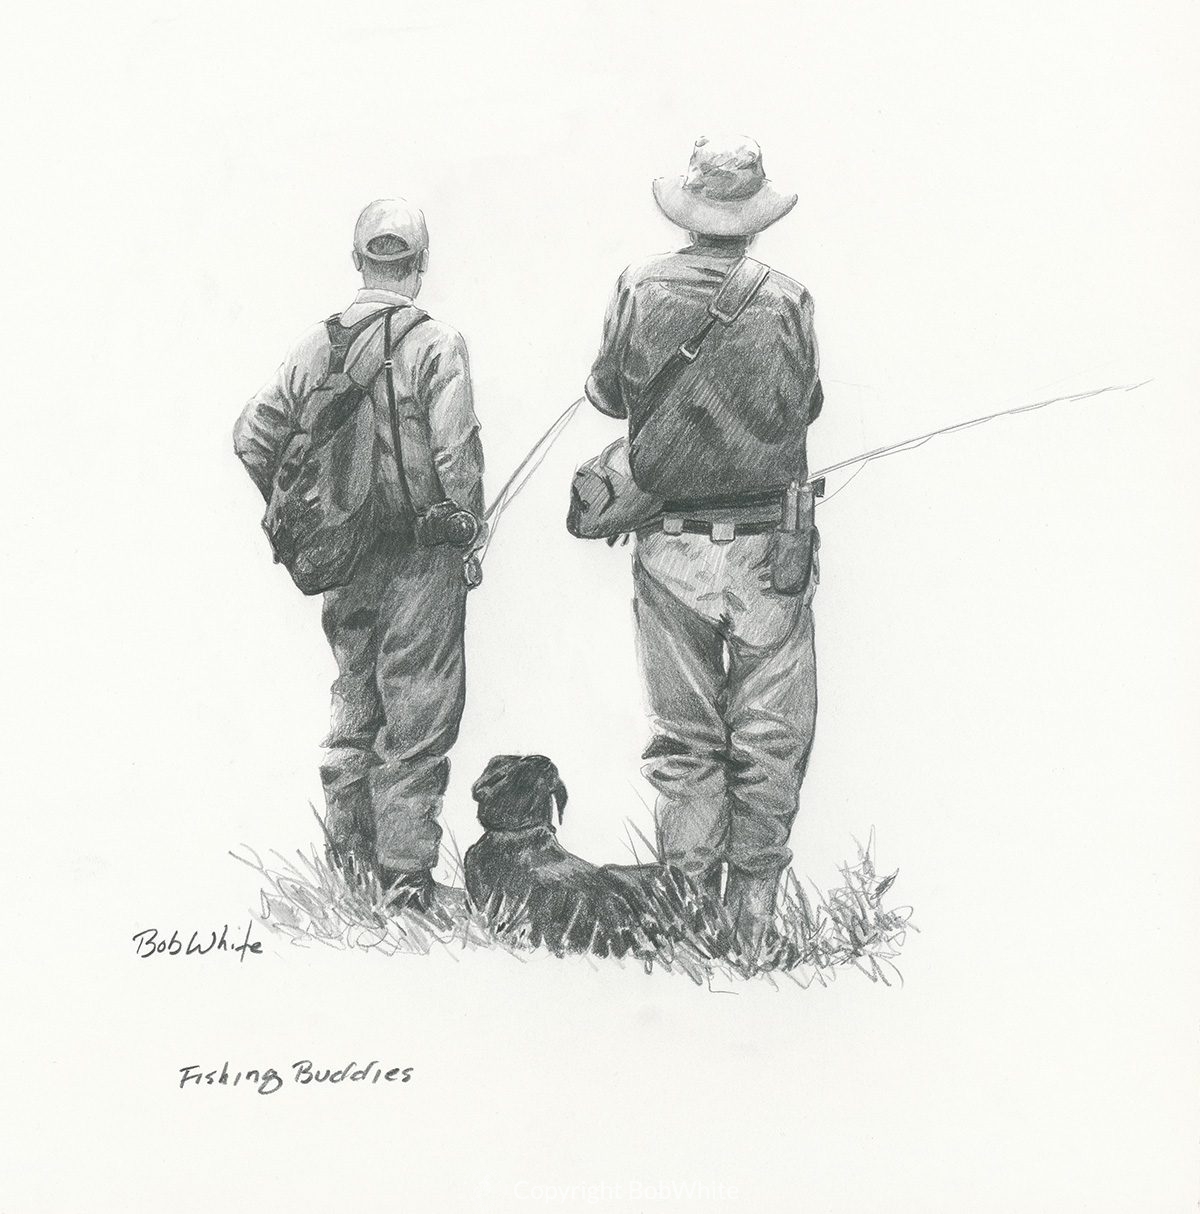 Fishing Buddies - BobWhite Studio